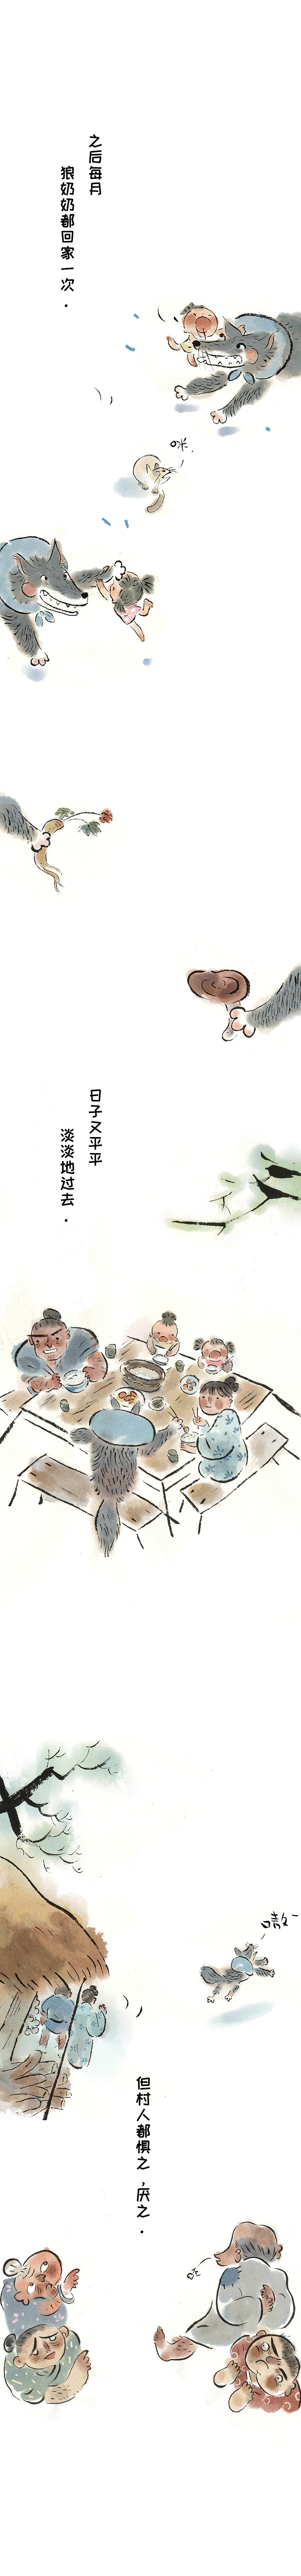 characterdesign cartoon comic chinese ILLUSTRATION 